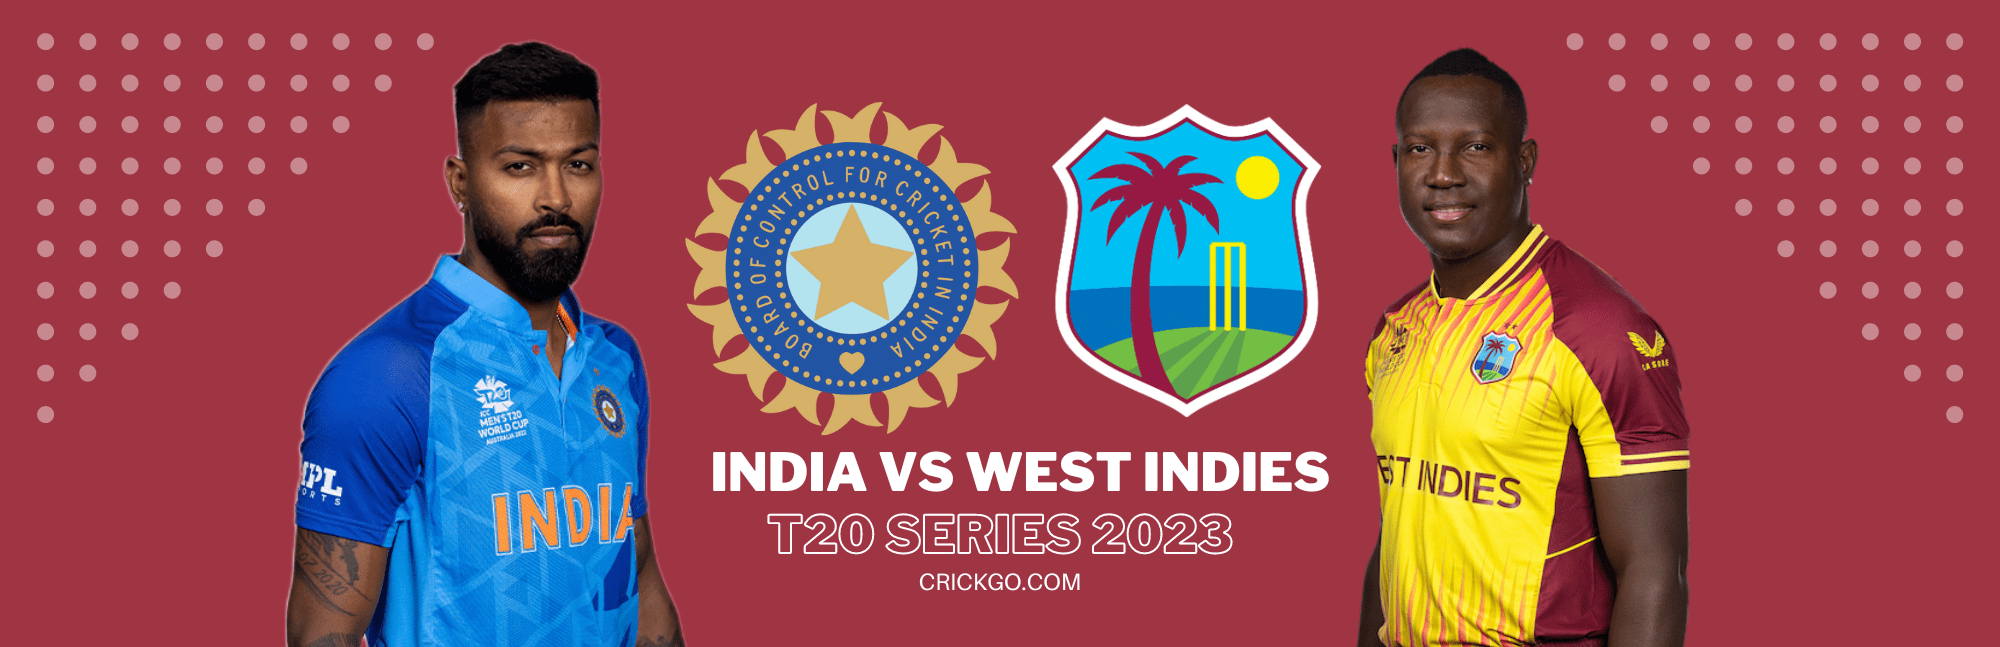 India vs West Indies T20 Series 2023